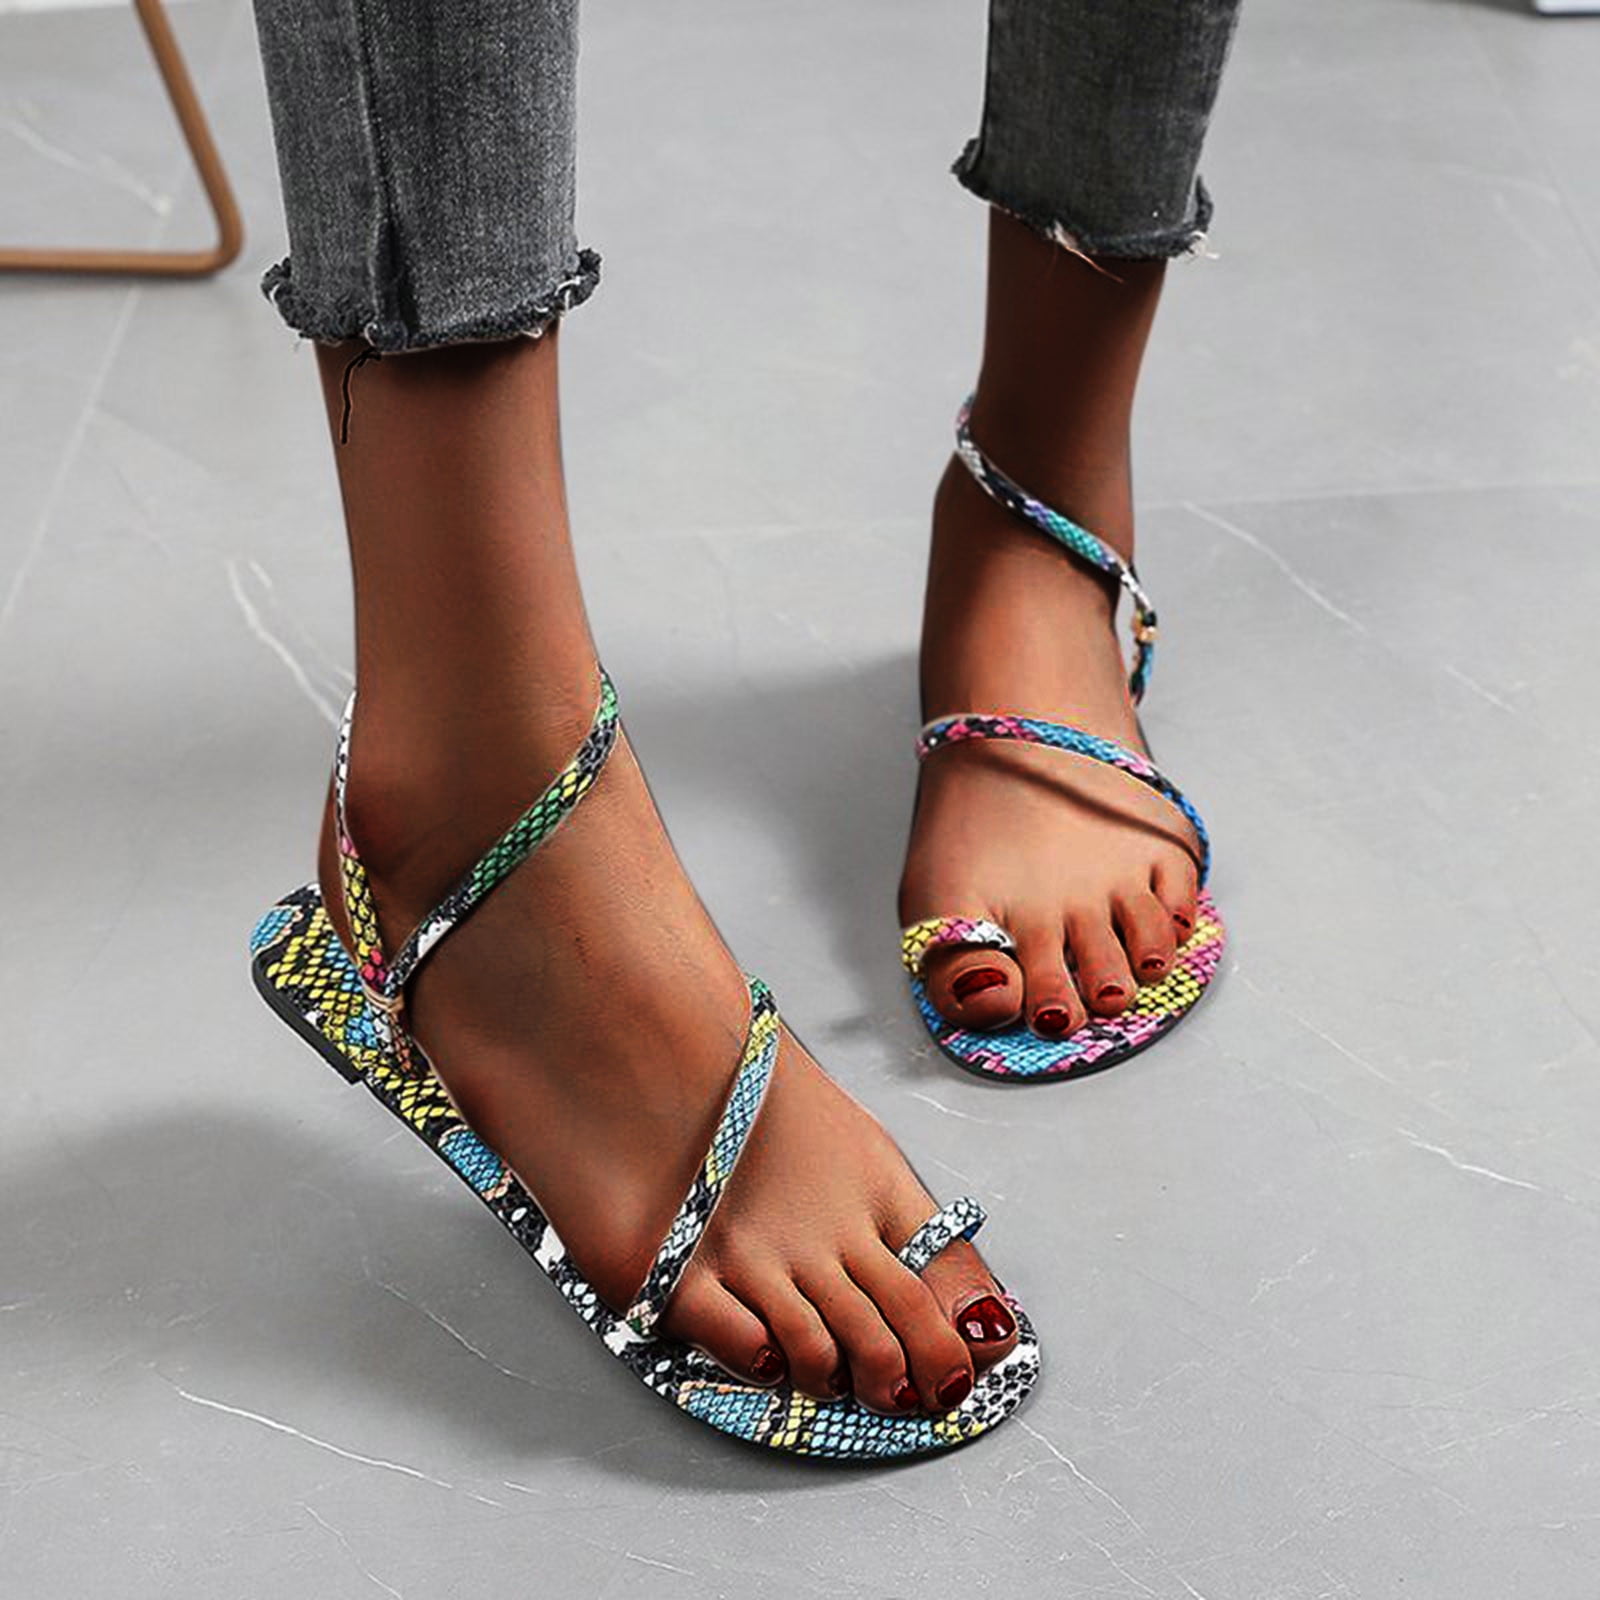 Ankle Wrap Flat Beach Shoes Fashion Bohemian Sequins Summer Sandals Inkach Women Flip-Flops Sandals 